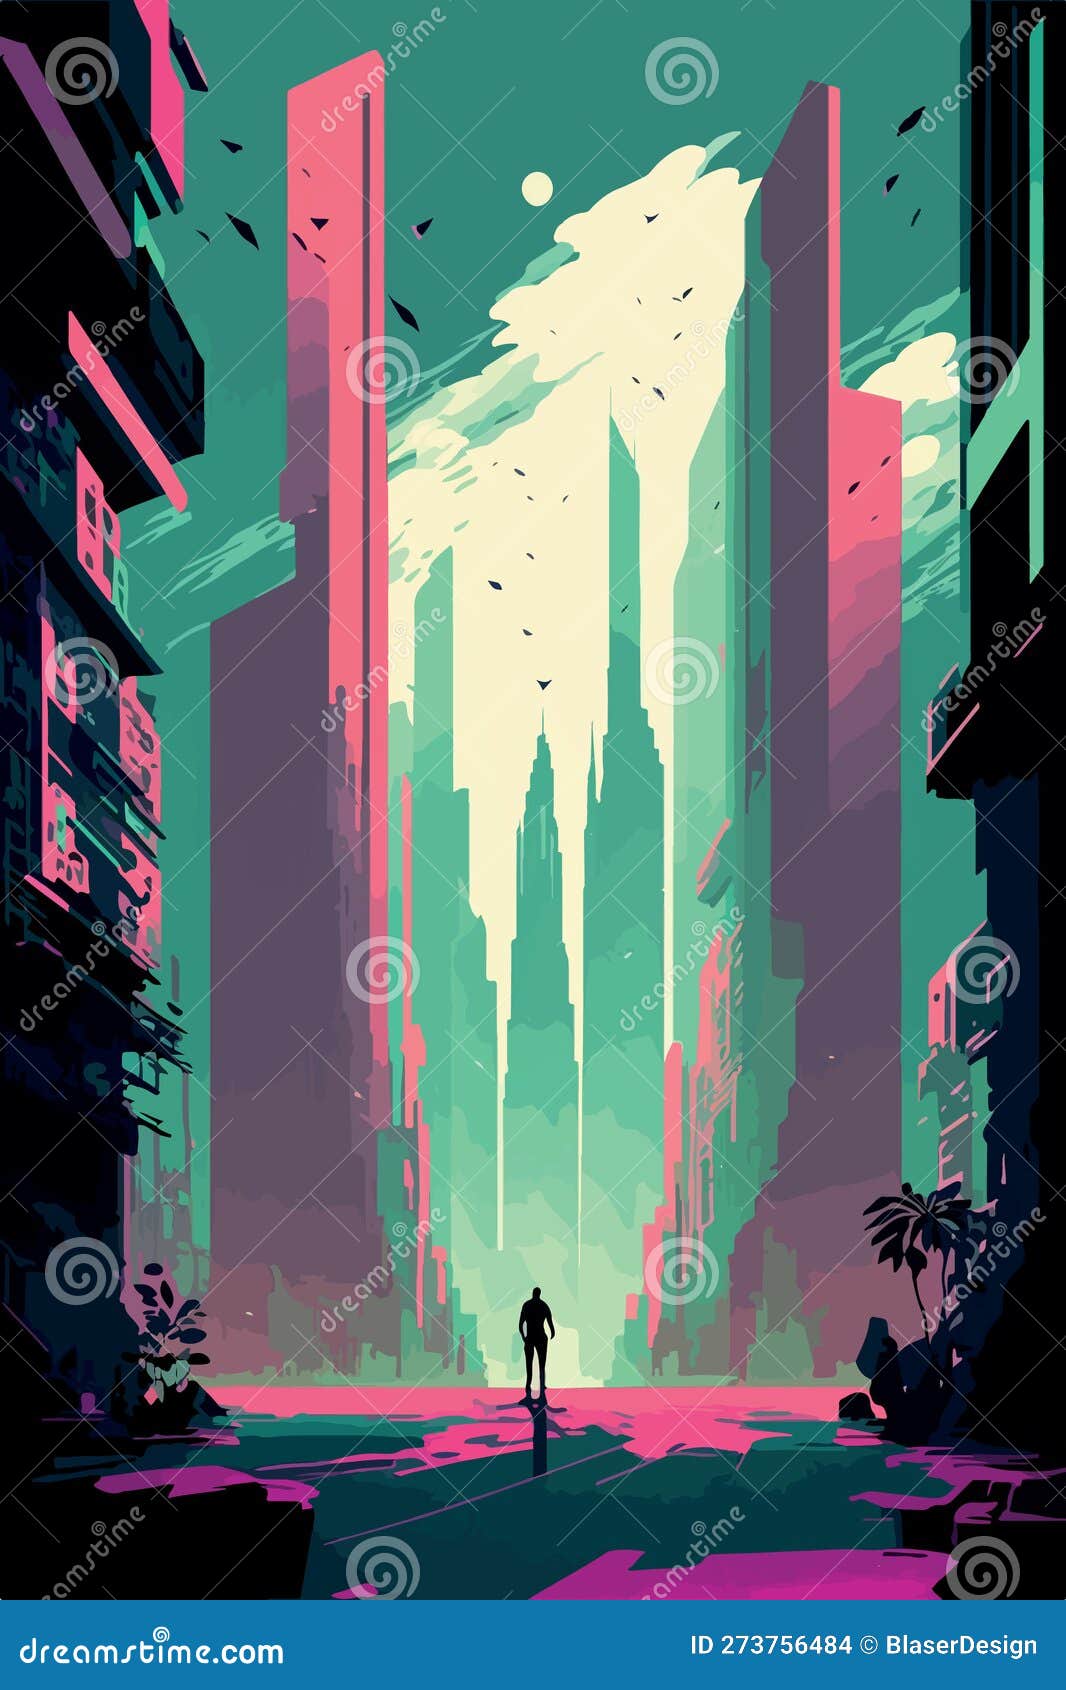 Download Dark Futuristic Cityscape Cyberpunk iPhone X Wallpaper